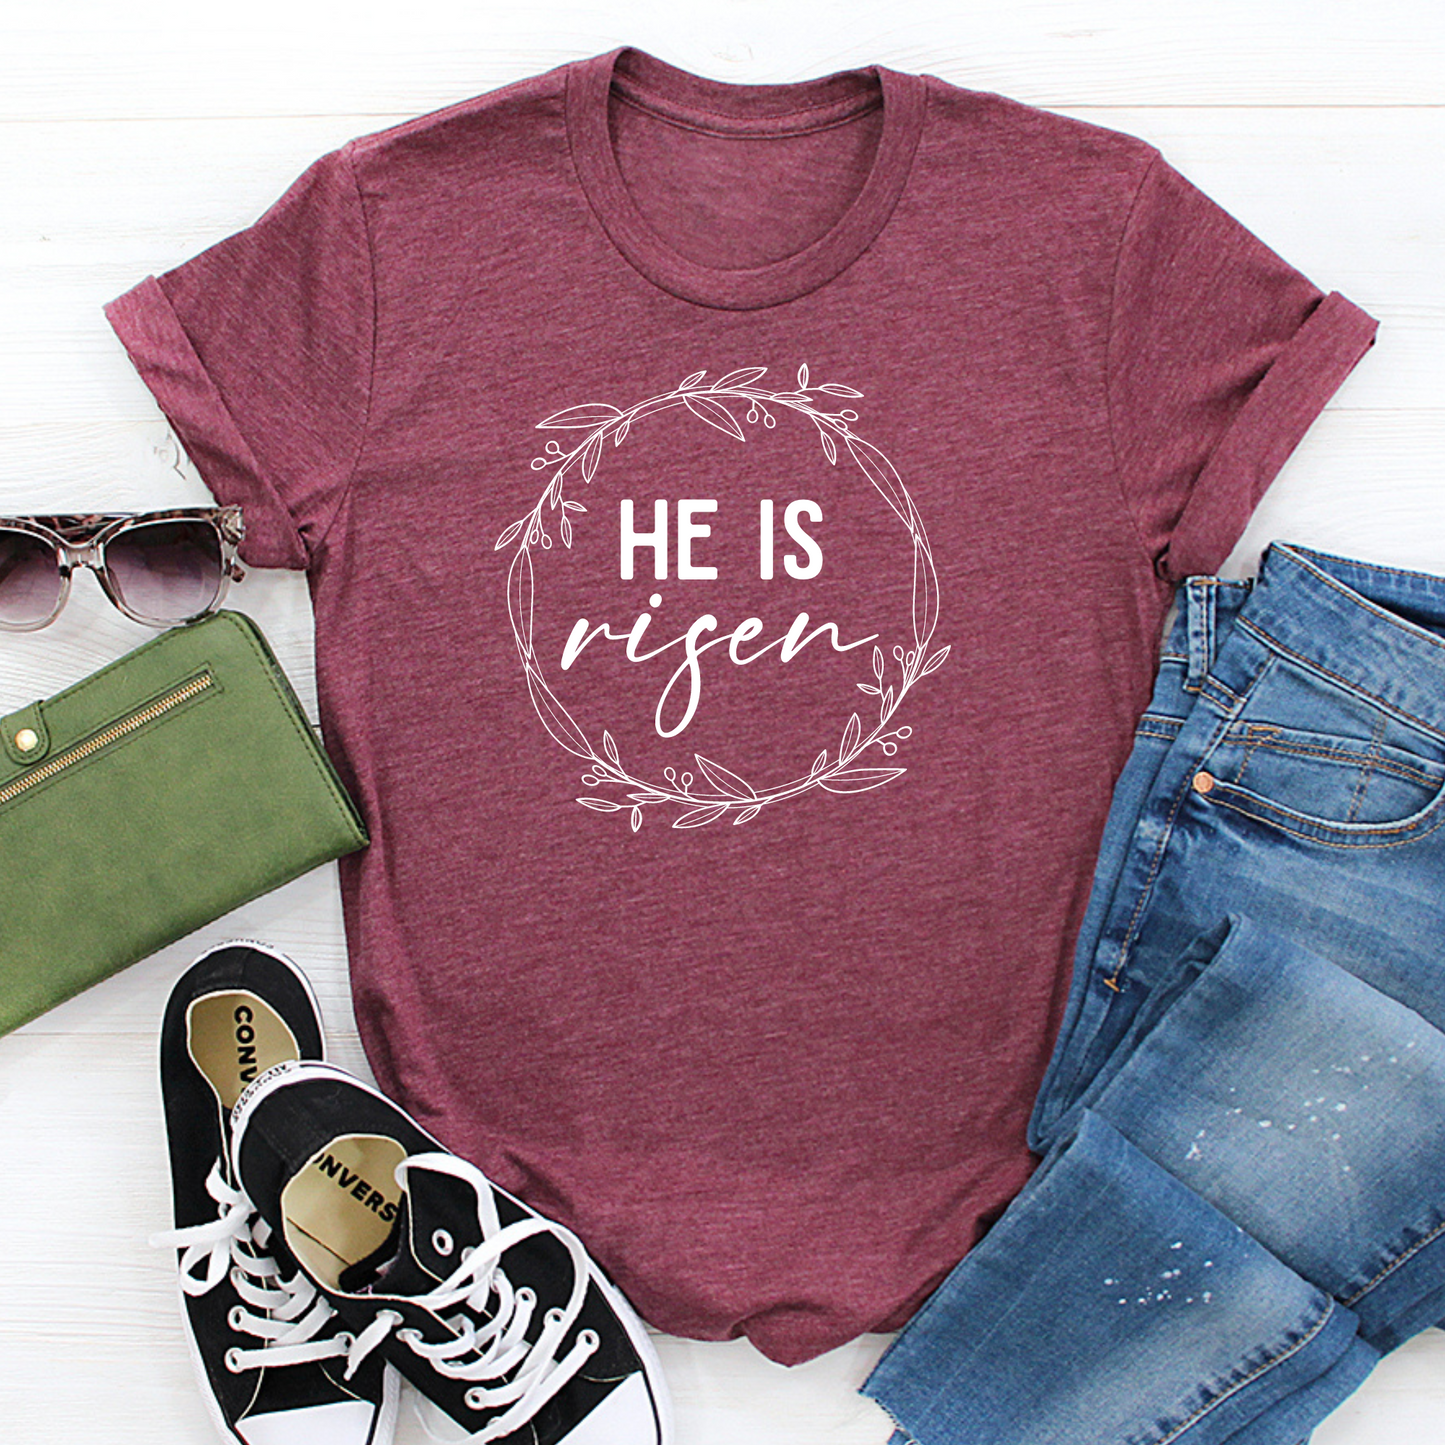 He is Risen - Heather Maroon T-Shirt